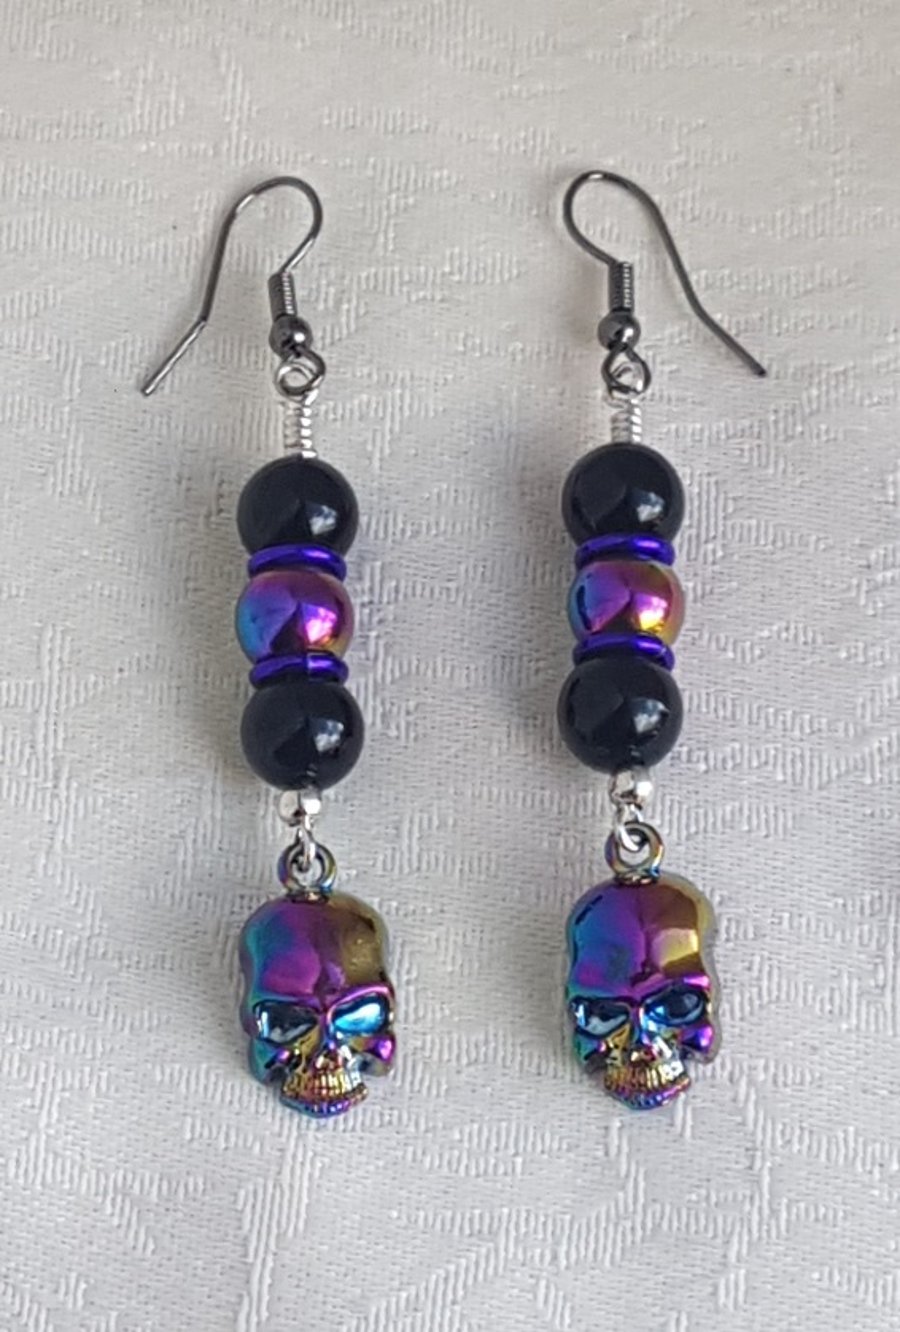 Rainbow Skull Earrings with Black Onyx and Rainbow Haematite Beads.